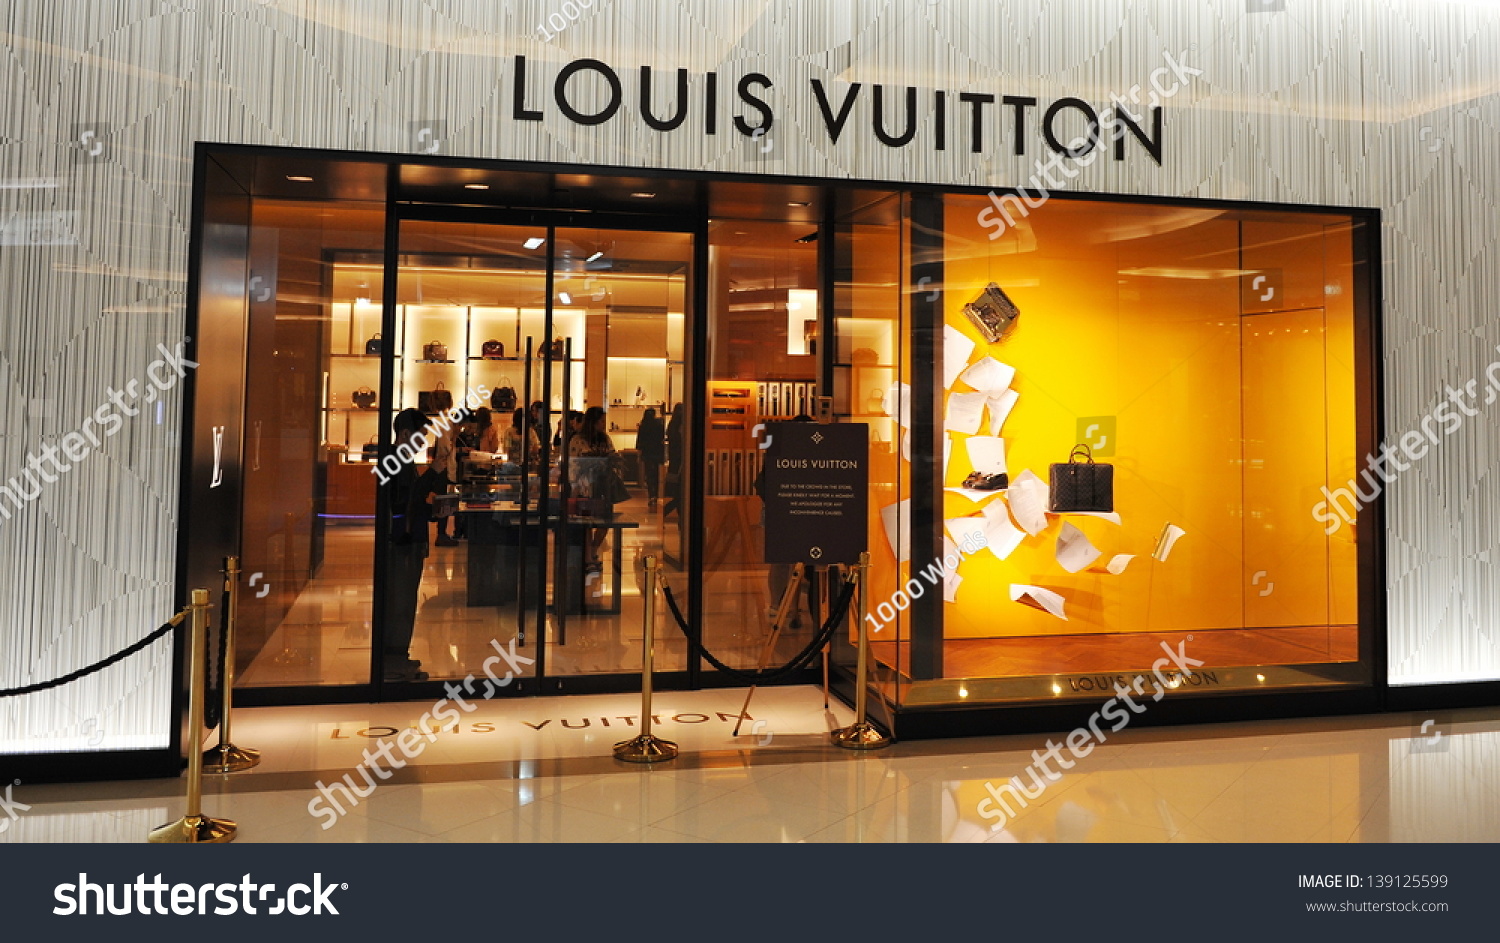 Bangkok - Jan 24: Exterior Of A Louis Vuitton Store On Apr 13, 2013 In Bangkok, Thailand. Louis ...